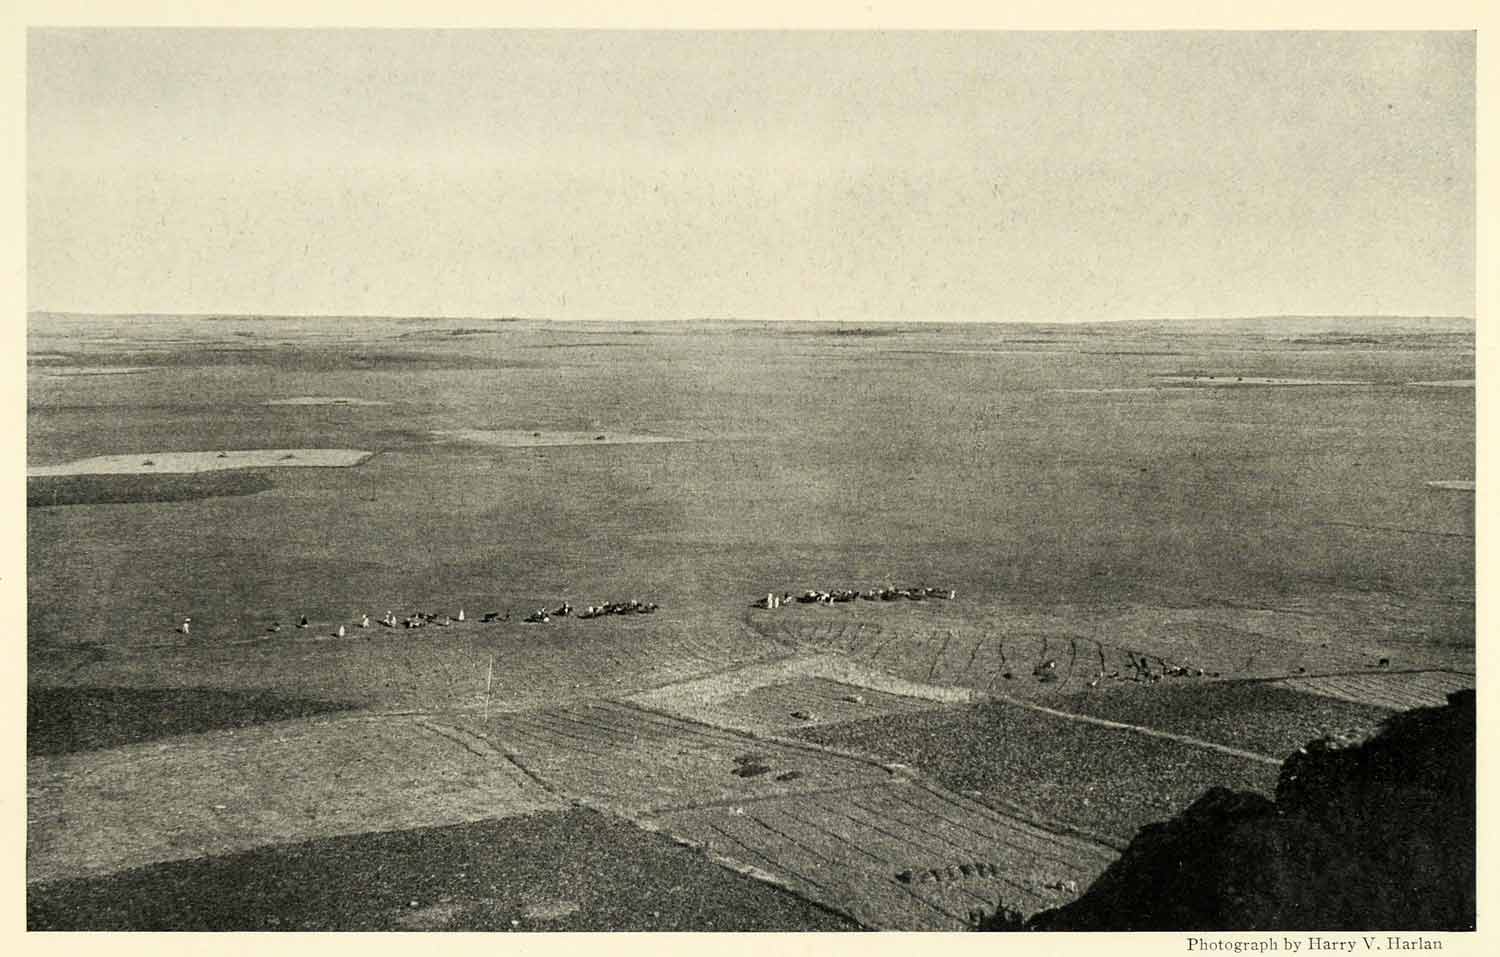 1925 Print Landscape High Plateau Ababa Gallabat Sudan Africa Field Caravan NGM2